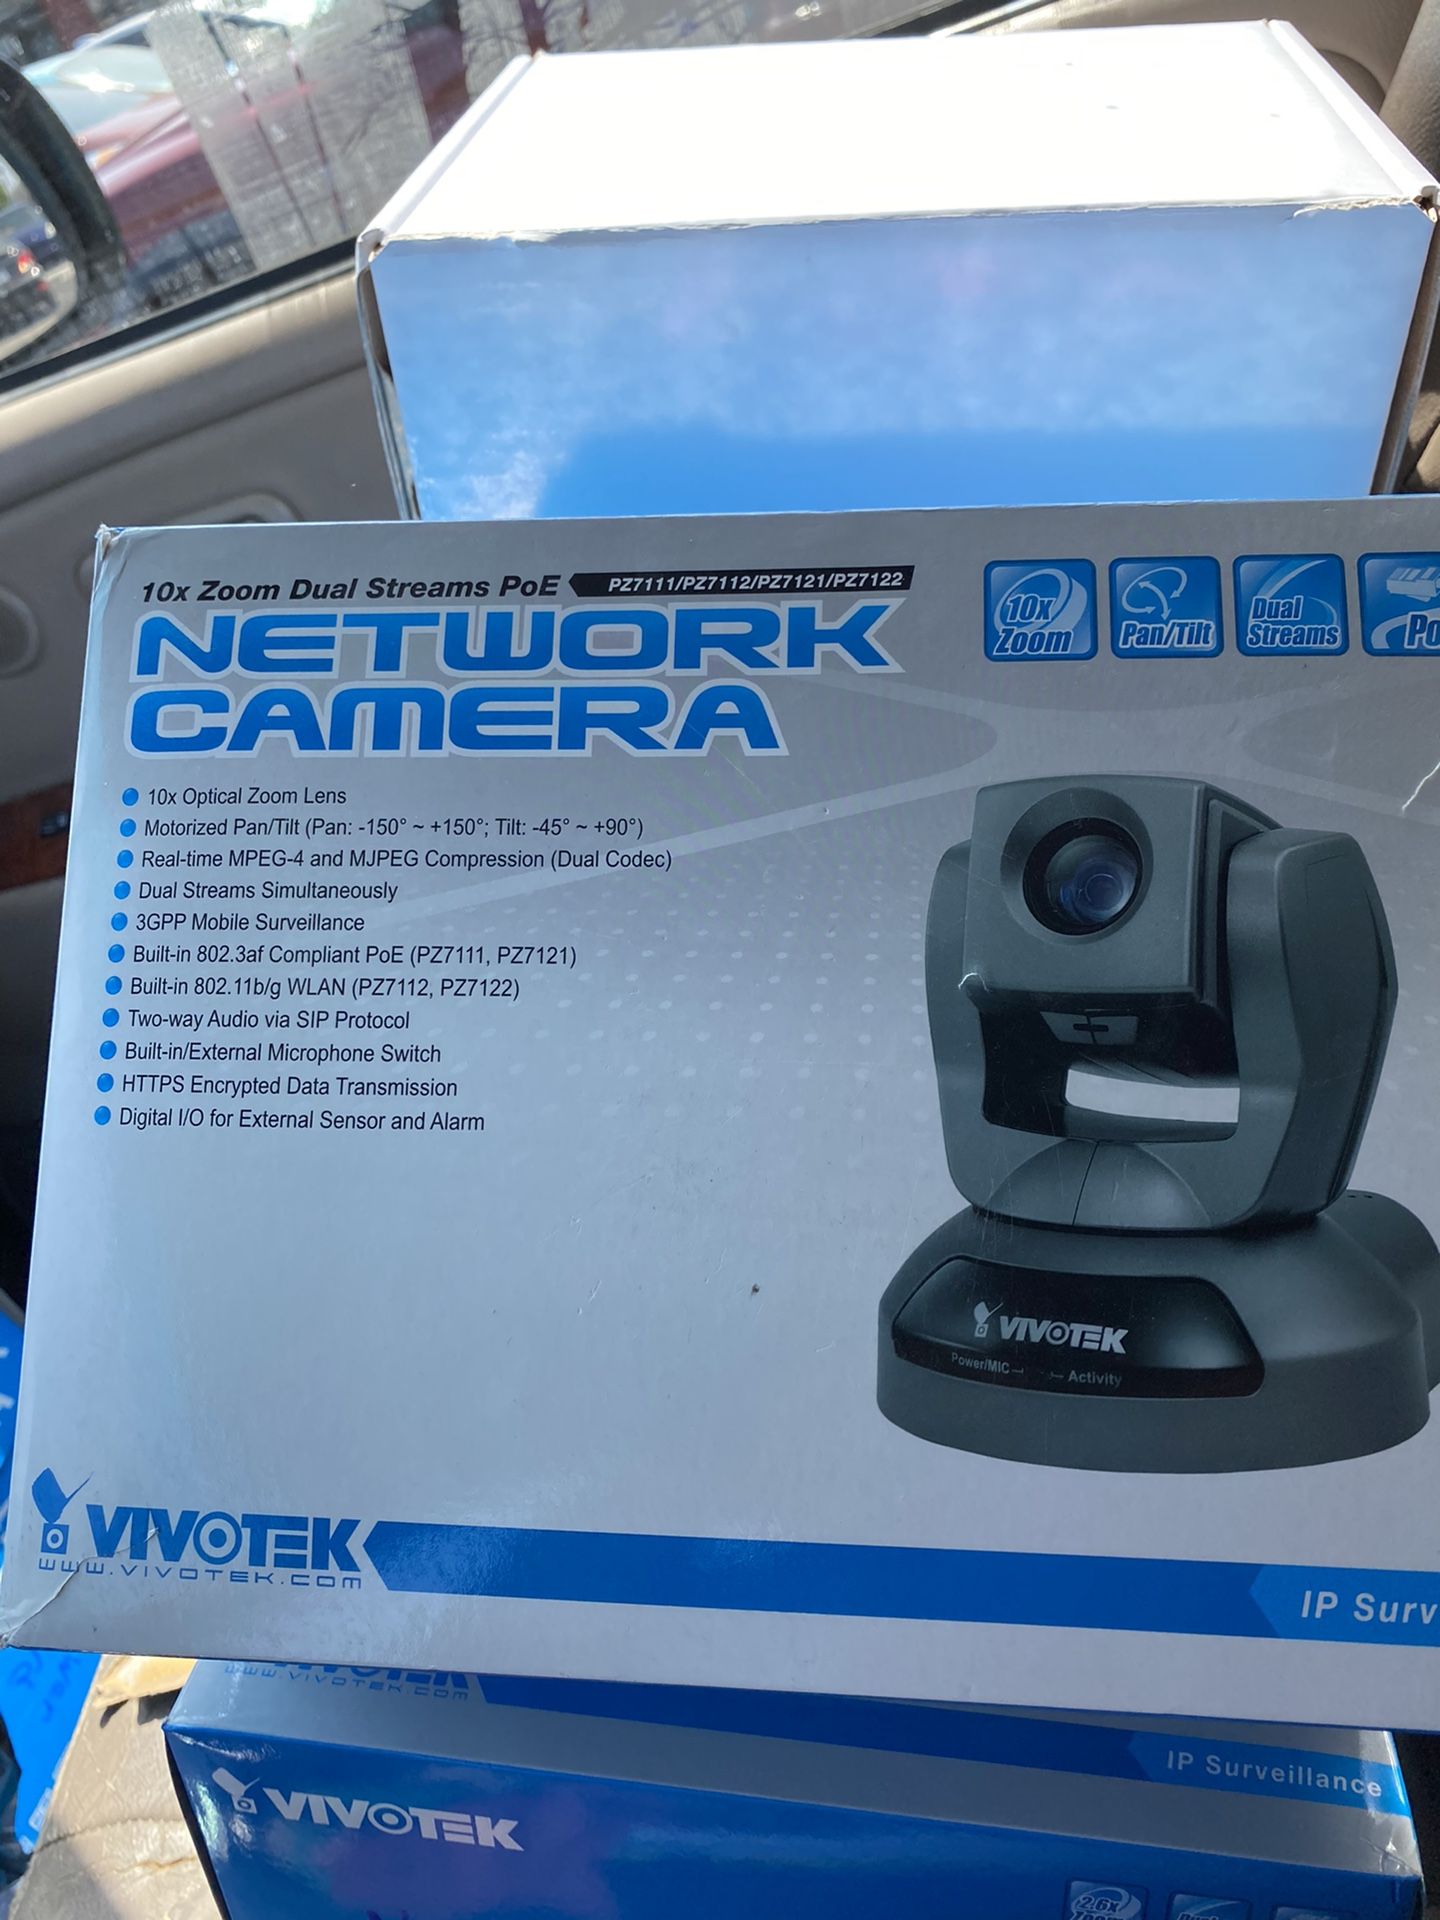 Vivotek Network Camera. 4 available. $165 each